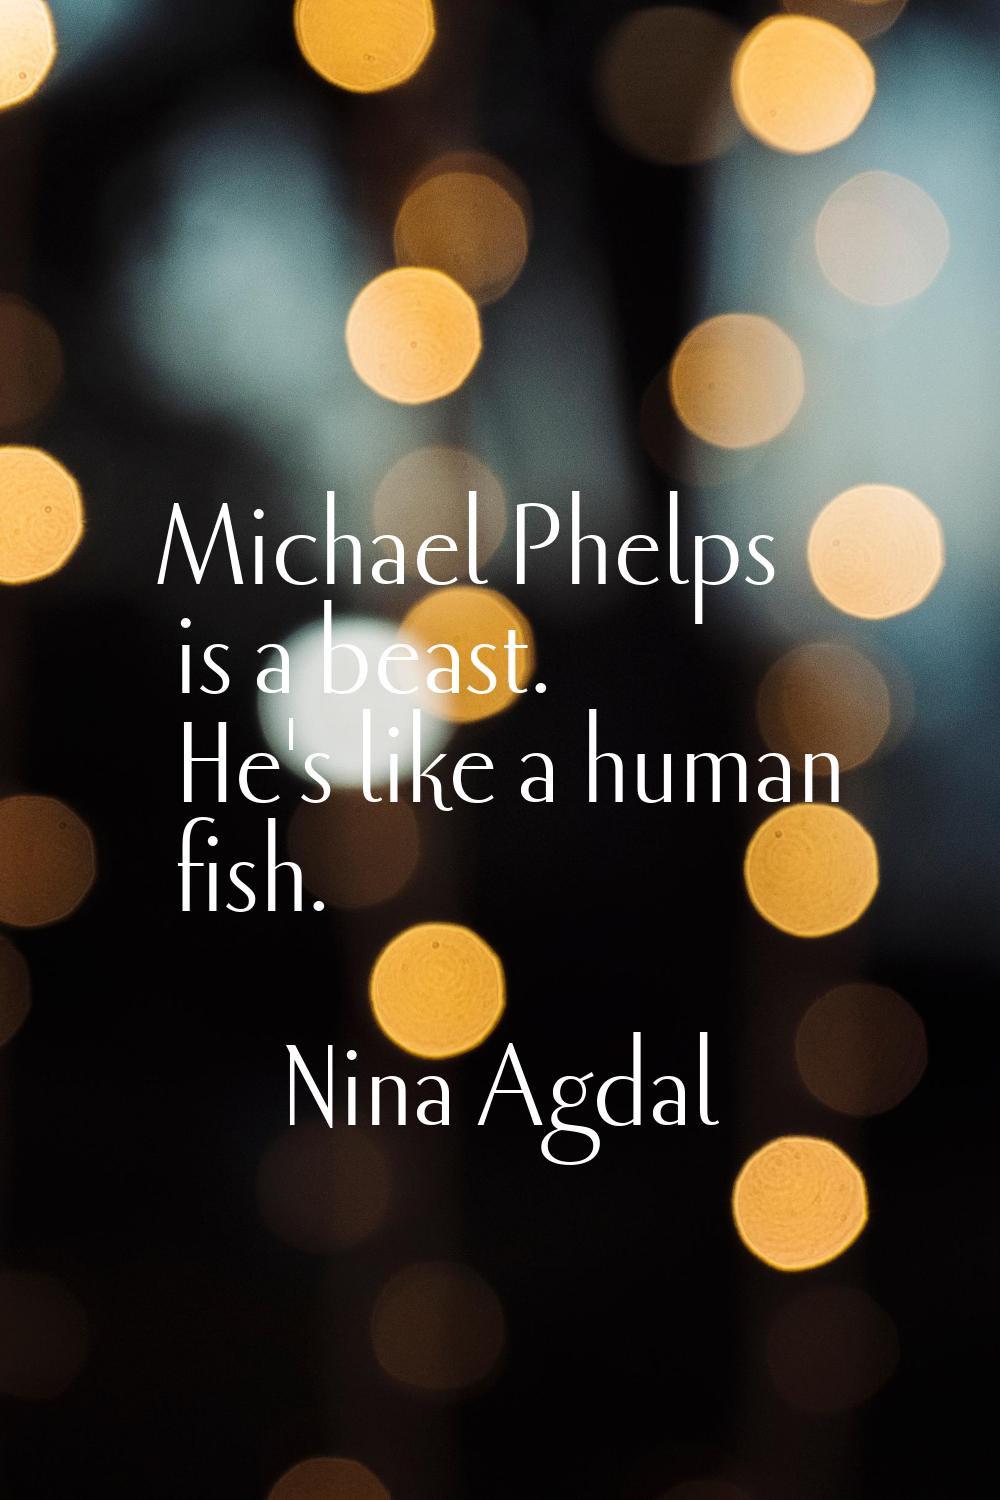 Michael Phelps is a beast. He's like a human fish.